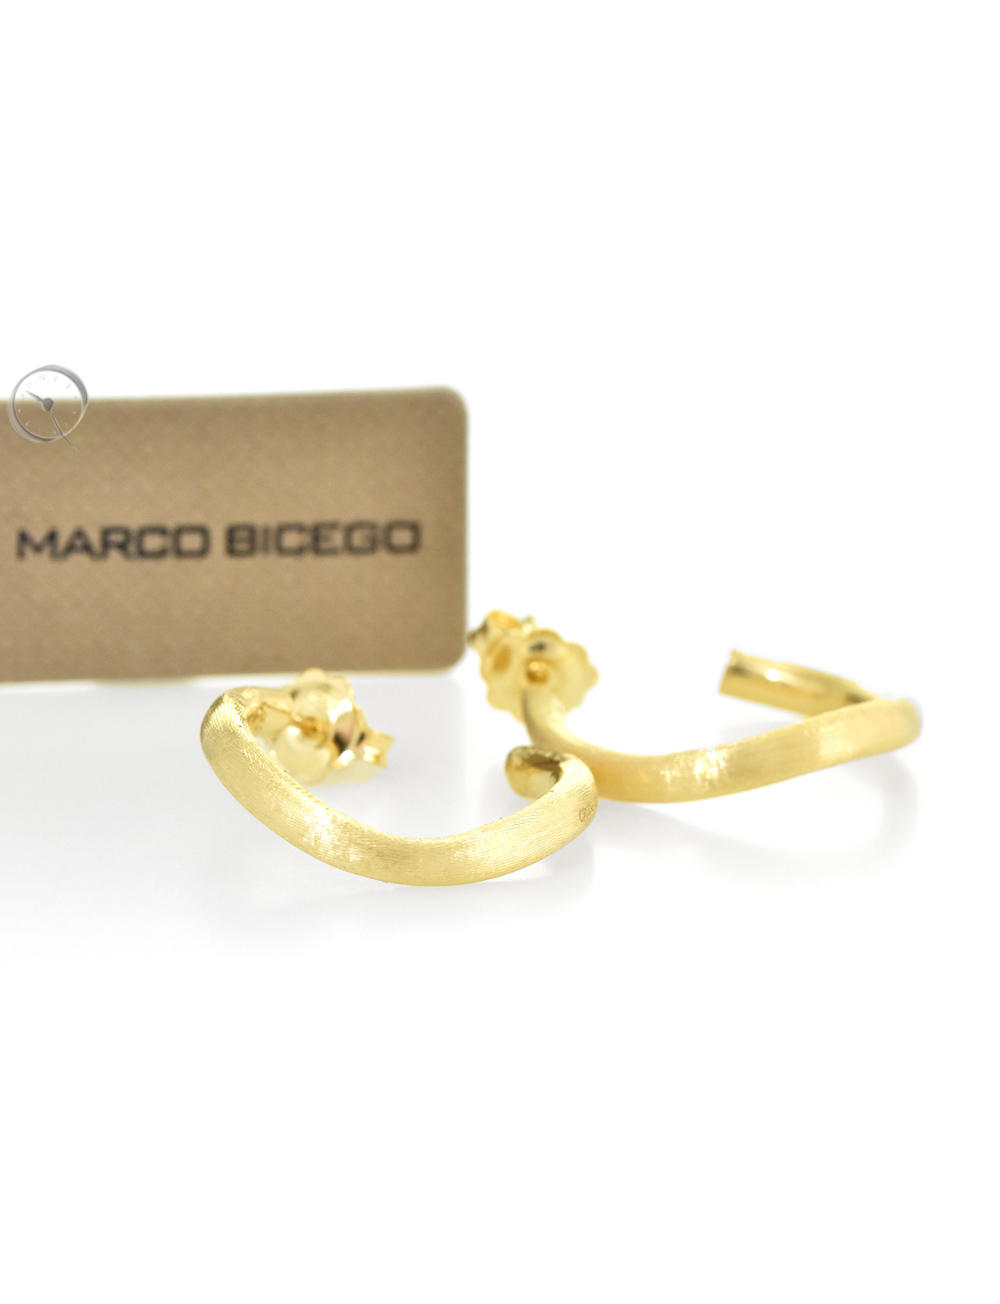 Marco Bicego Jaipur earrings